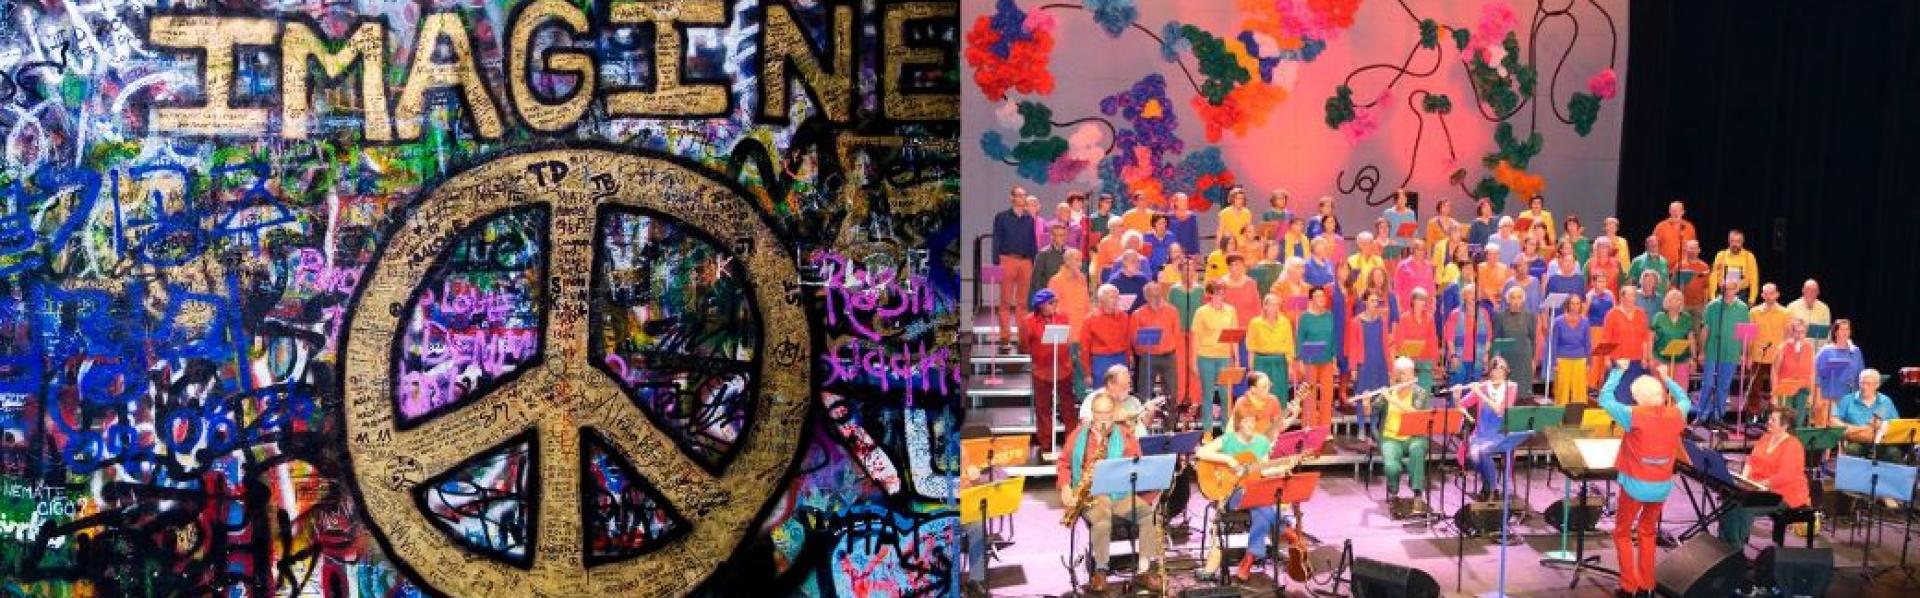 lennon wall en podiumfoto van de kleurrijke Wosh zang&muziekgroep